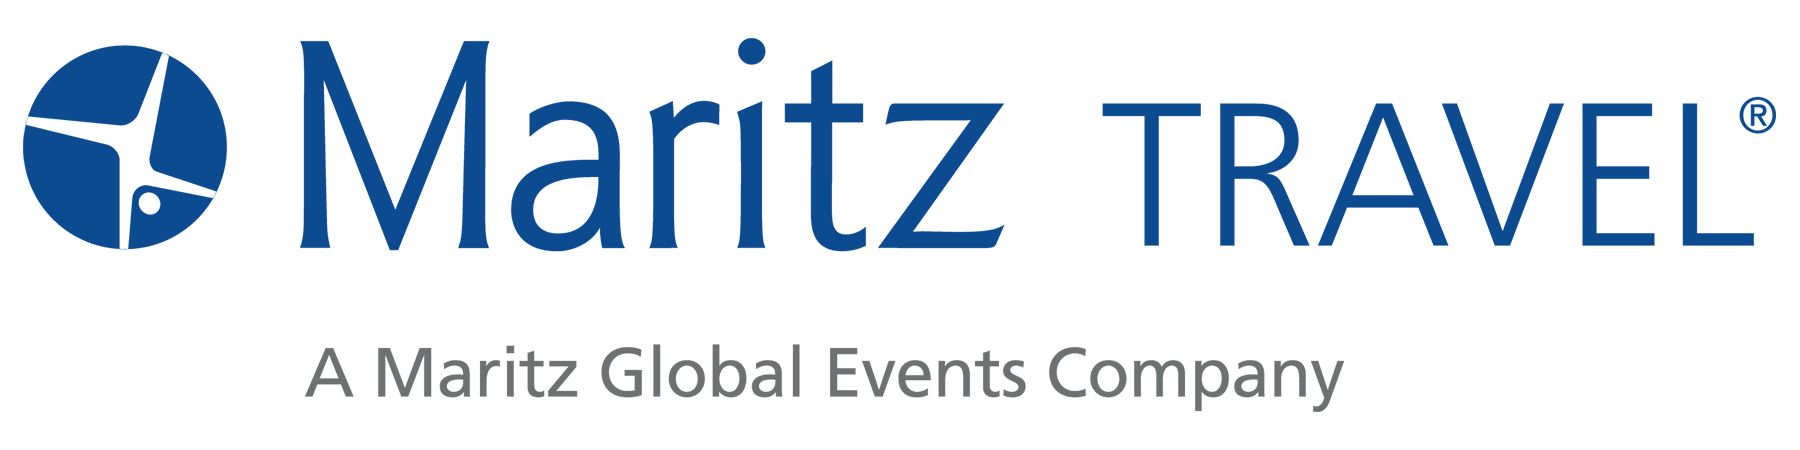 Maritz Travel - A Maritz Global Events Company Logo